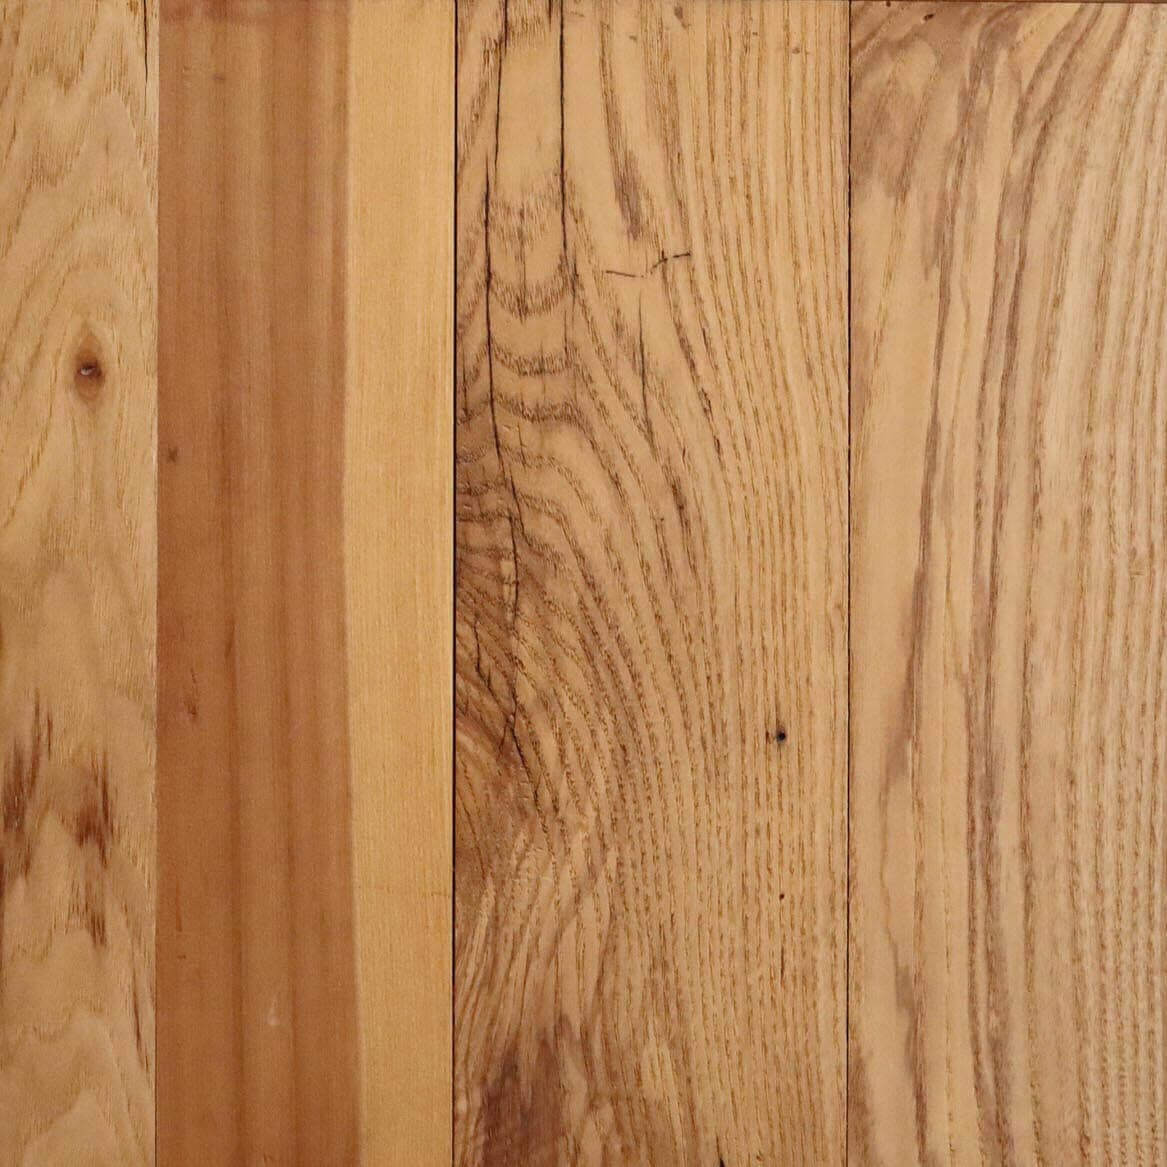 Mixed hardwood flooring swatch